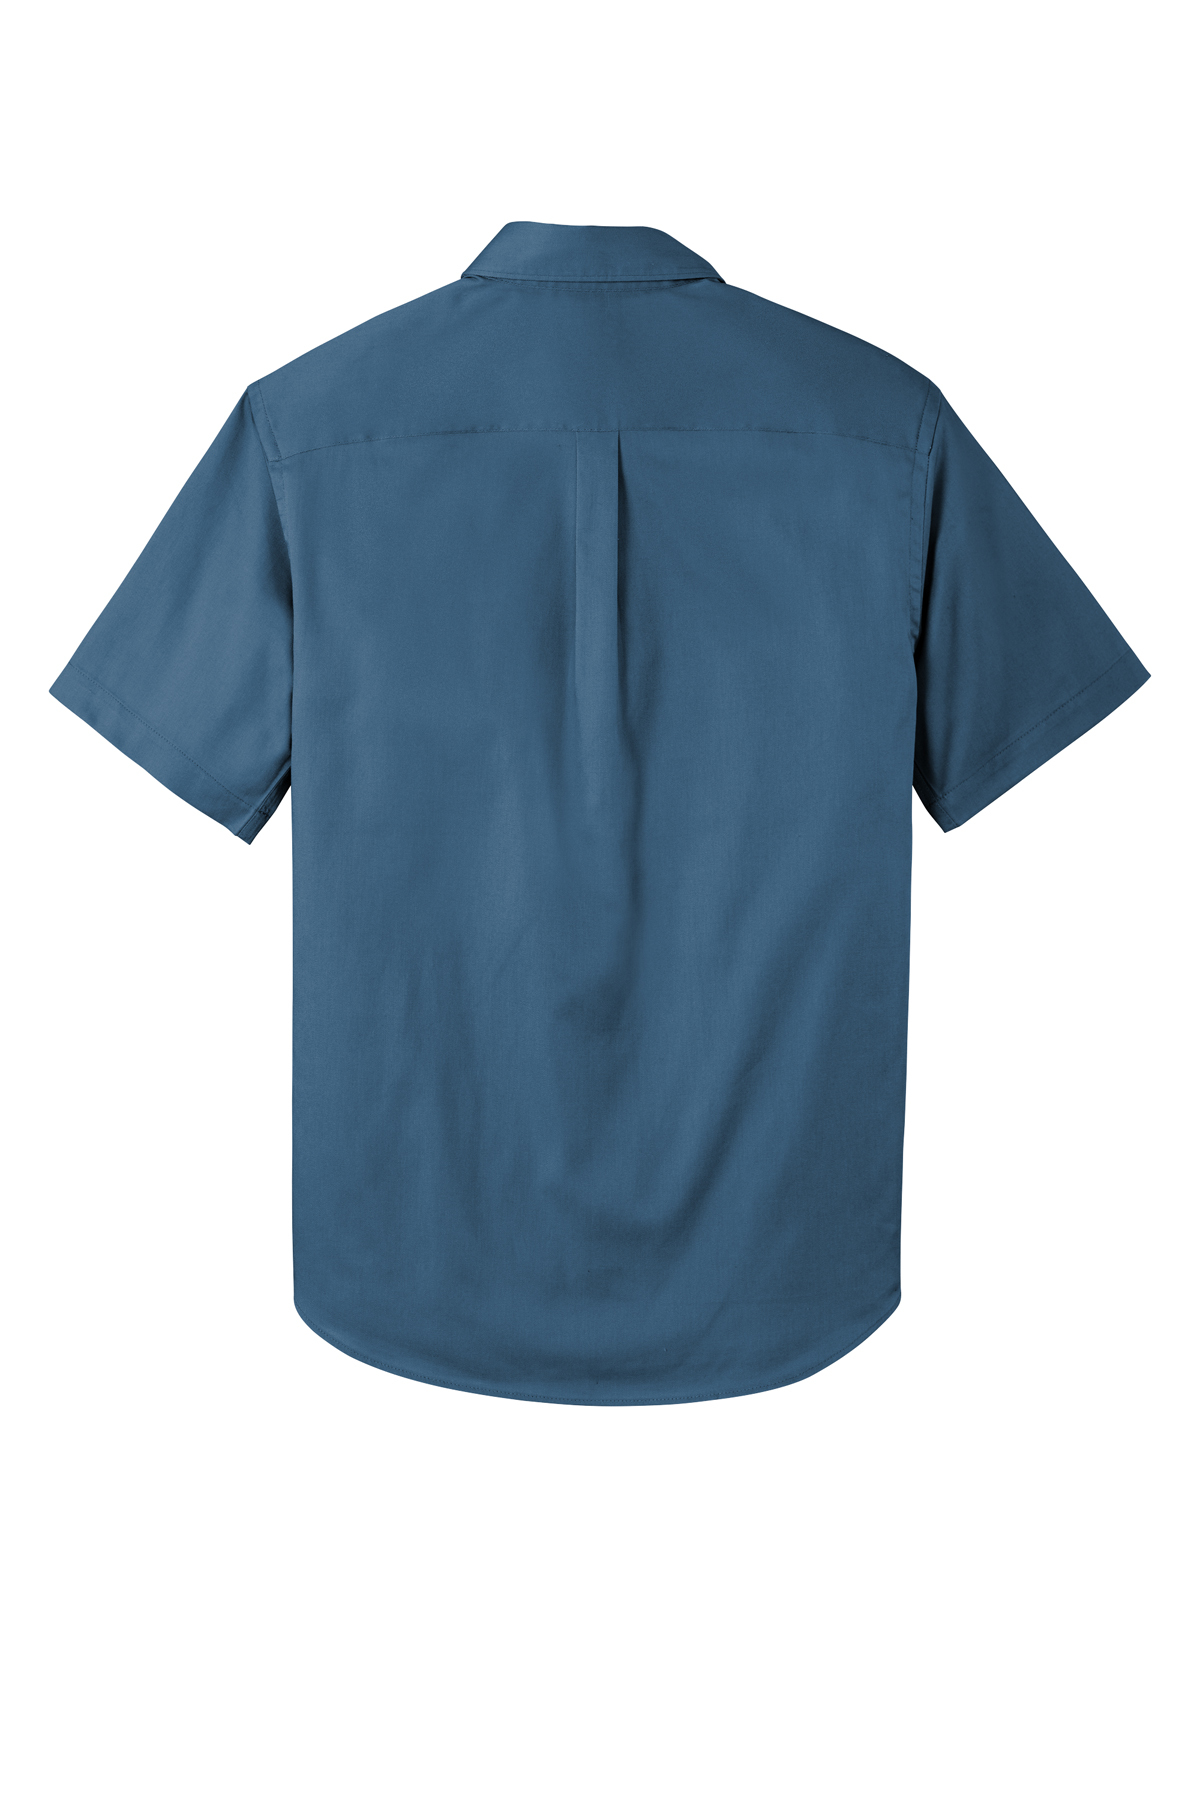 Port Authority Short Sleeve SuperPro ReactTwill Shirt | Product ...